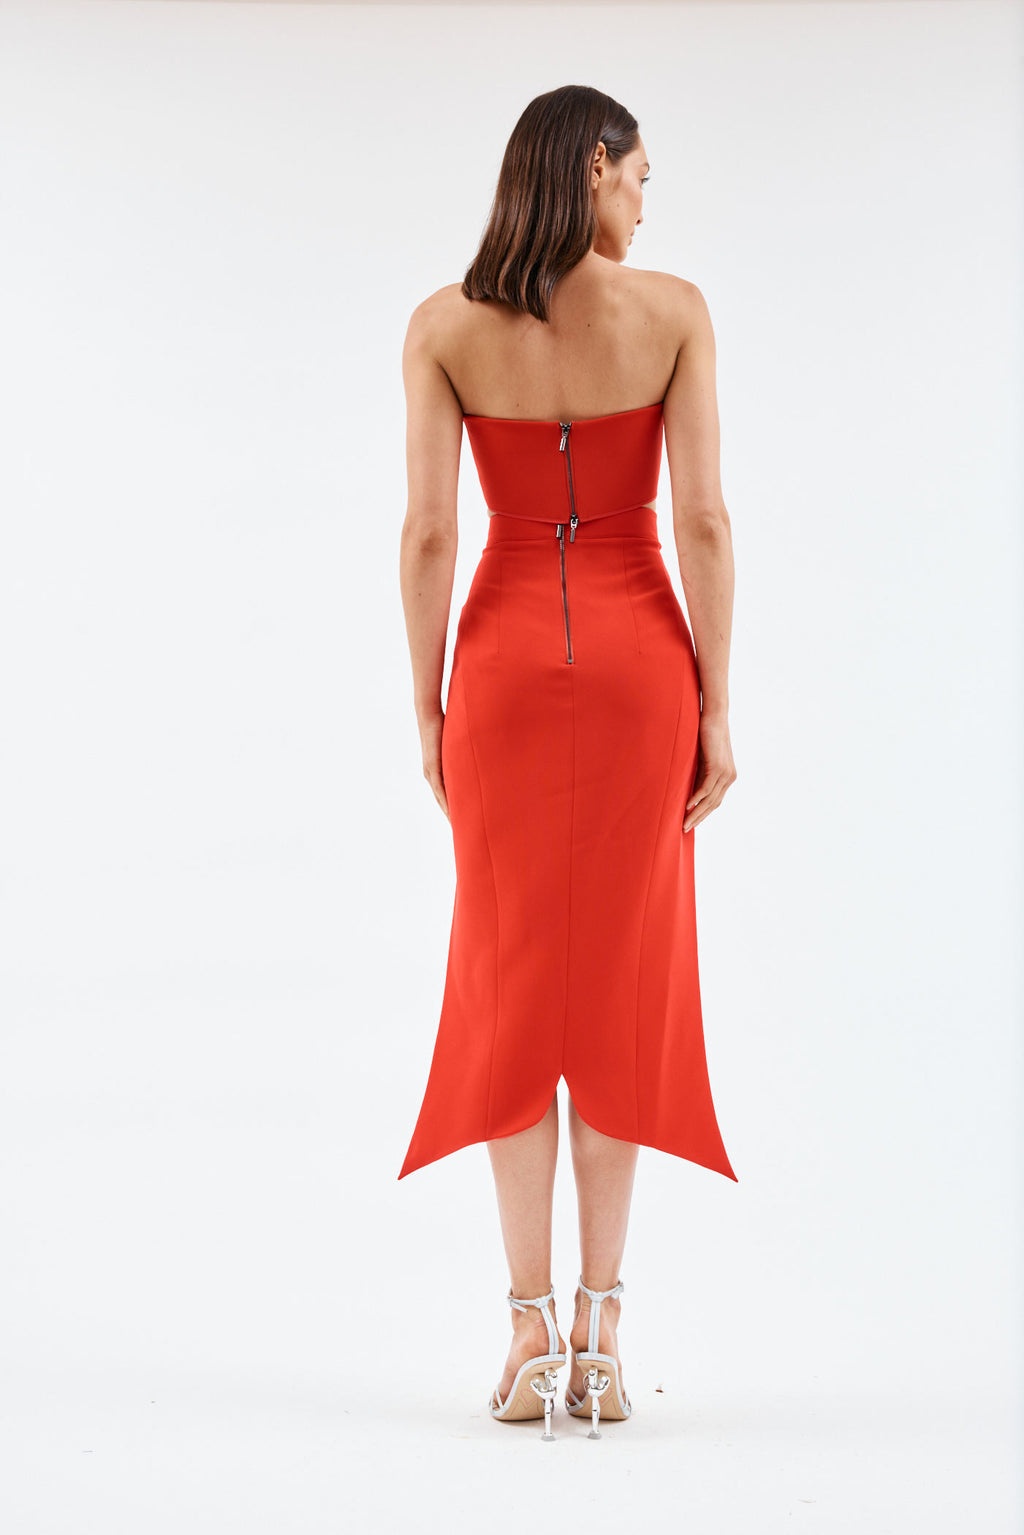 Furtive Red Cutaway Skirt